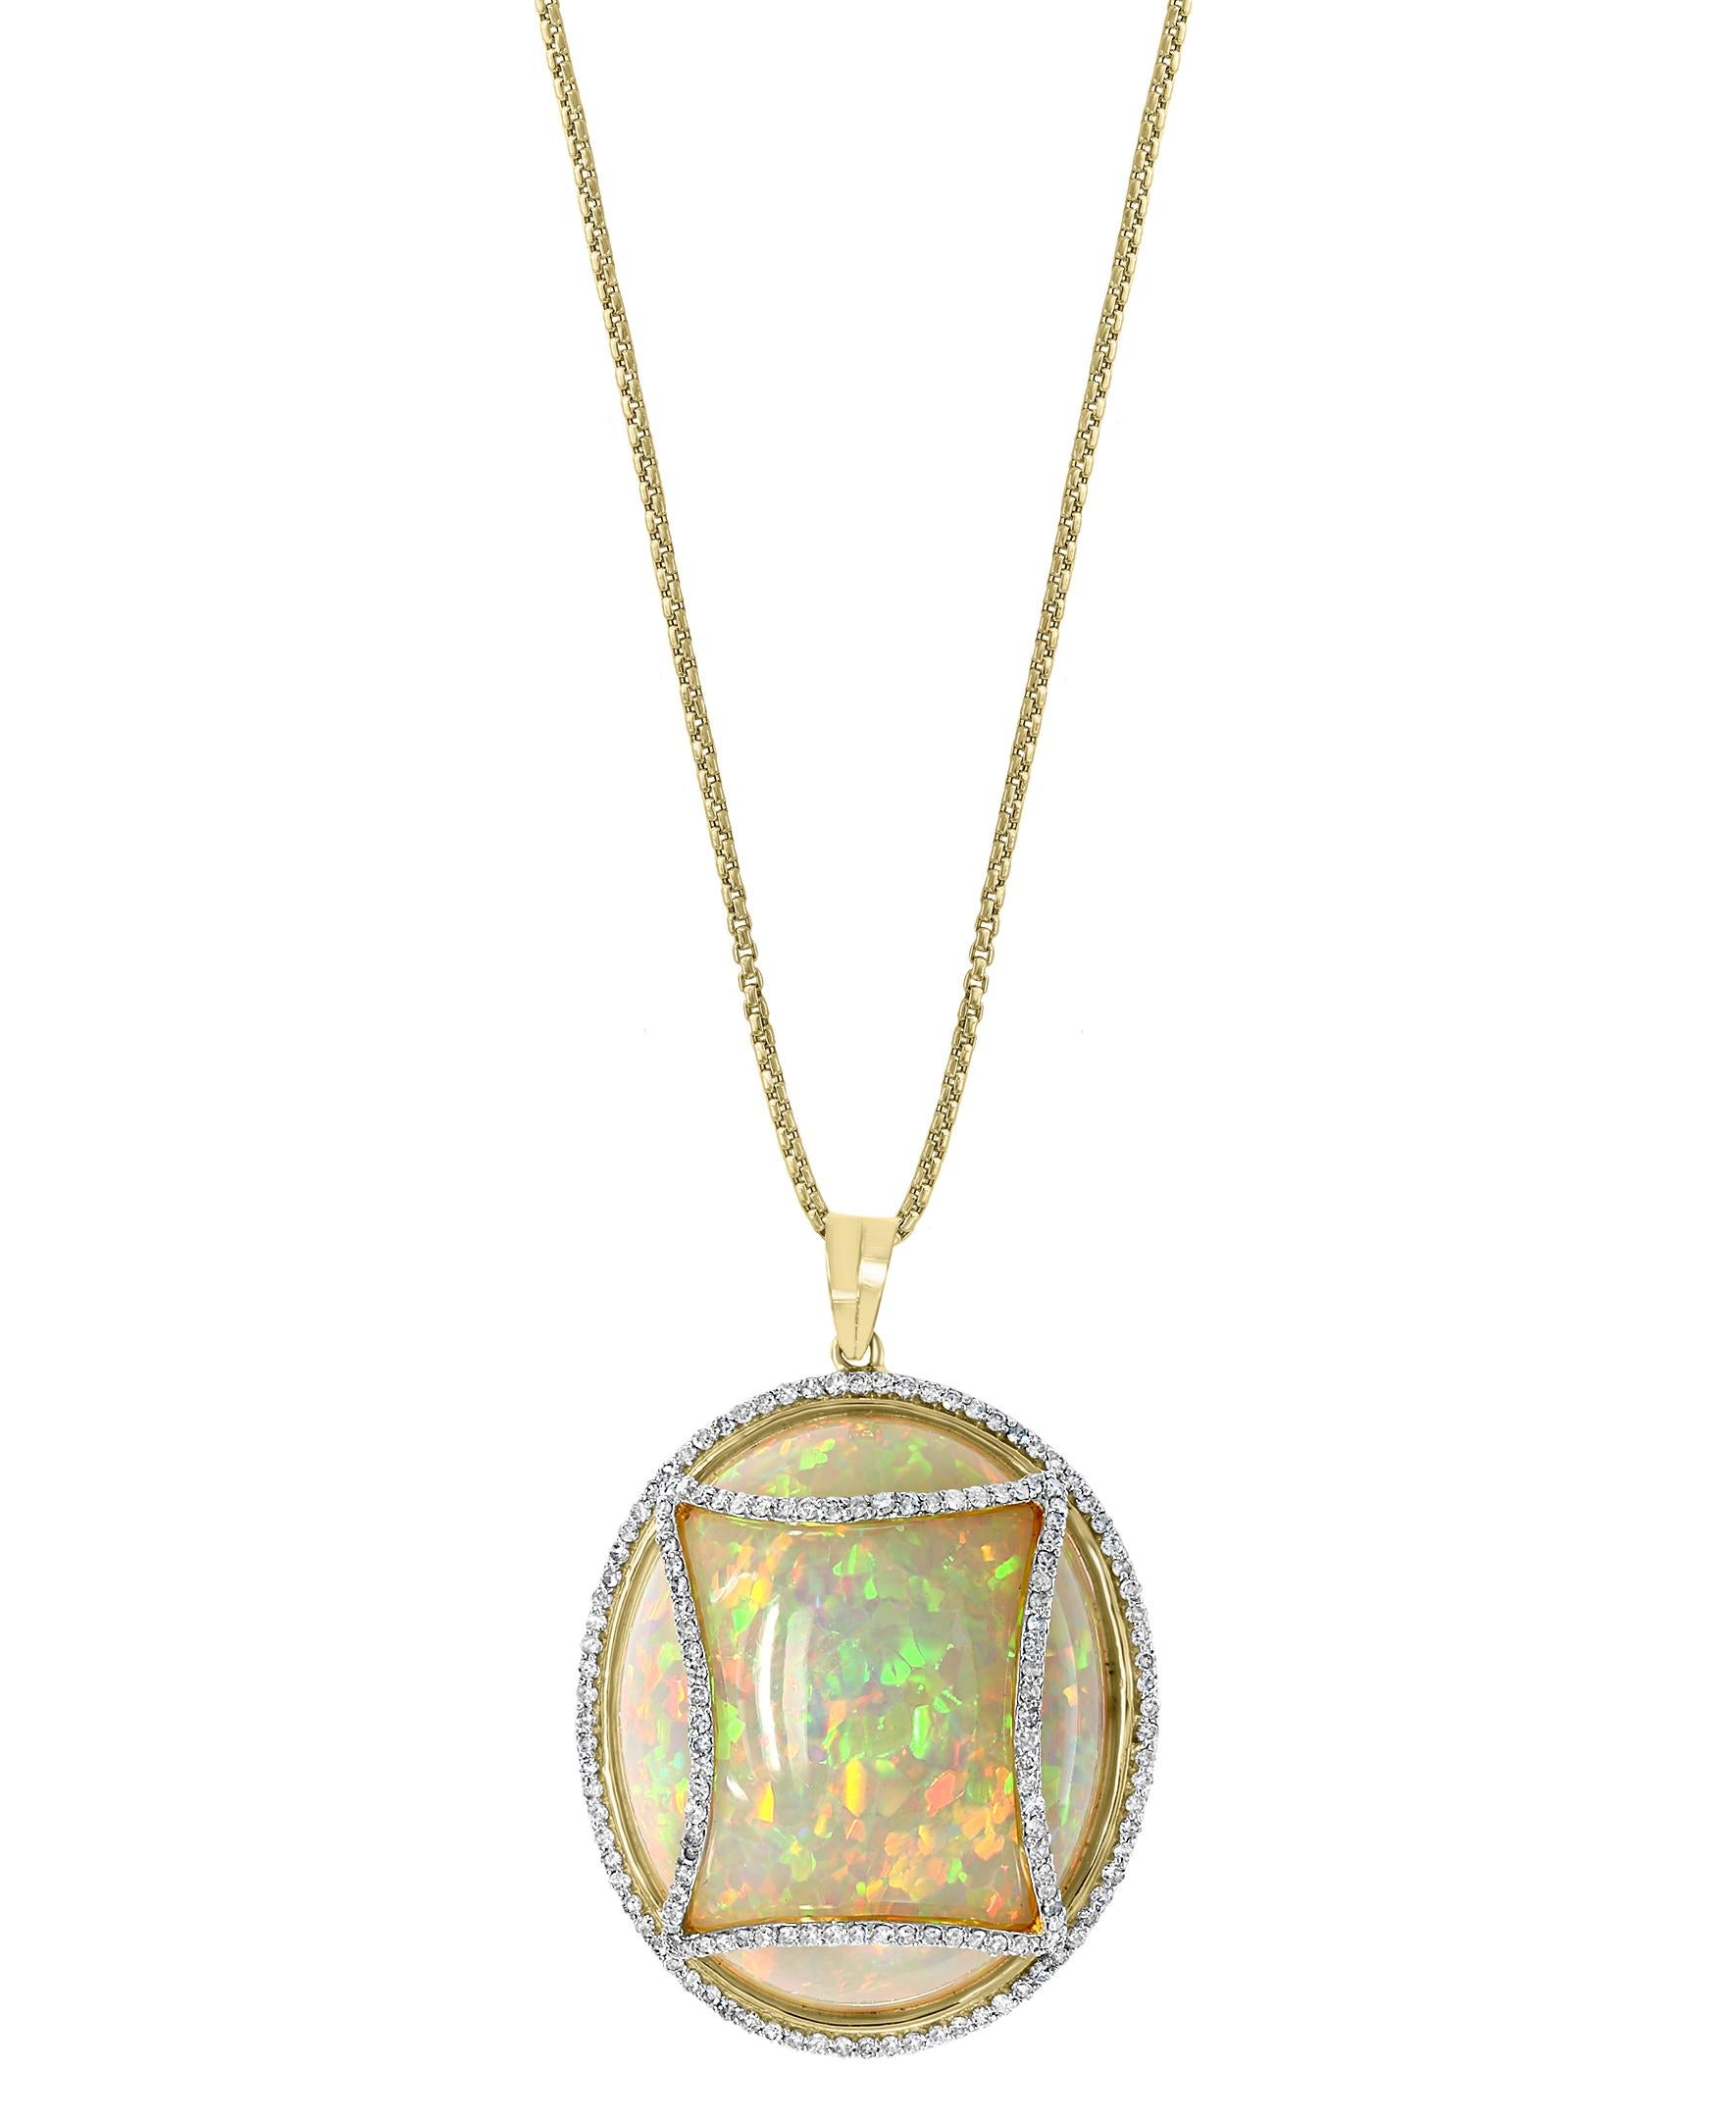 Oval Cut 70 Carat Oval Ethiopian Opal and Diamond Pendant or Necklace 14 Karat Gold For Sale